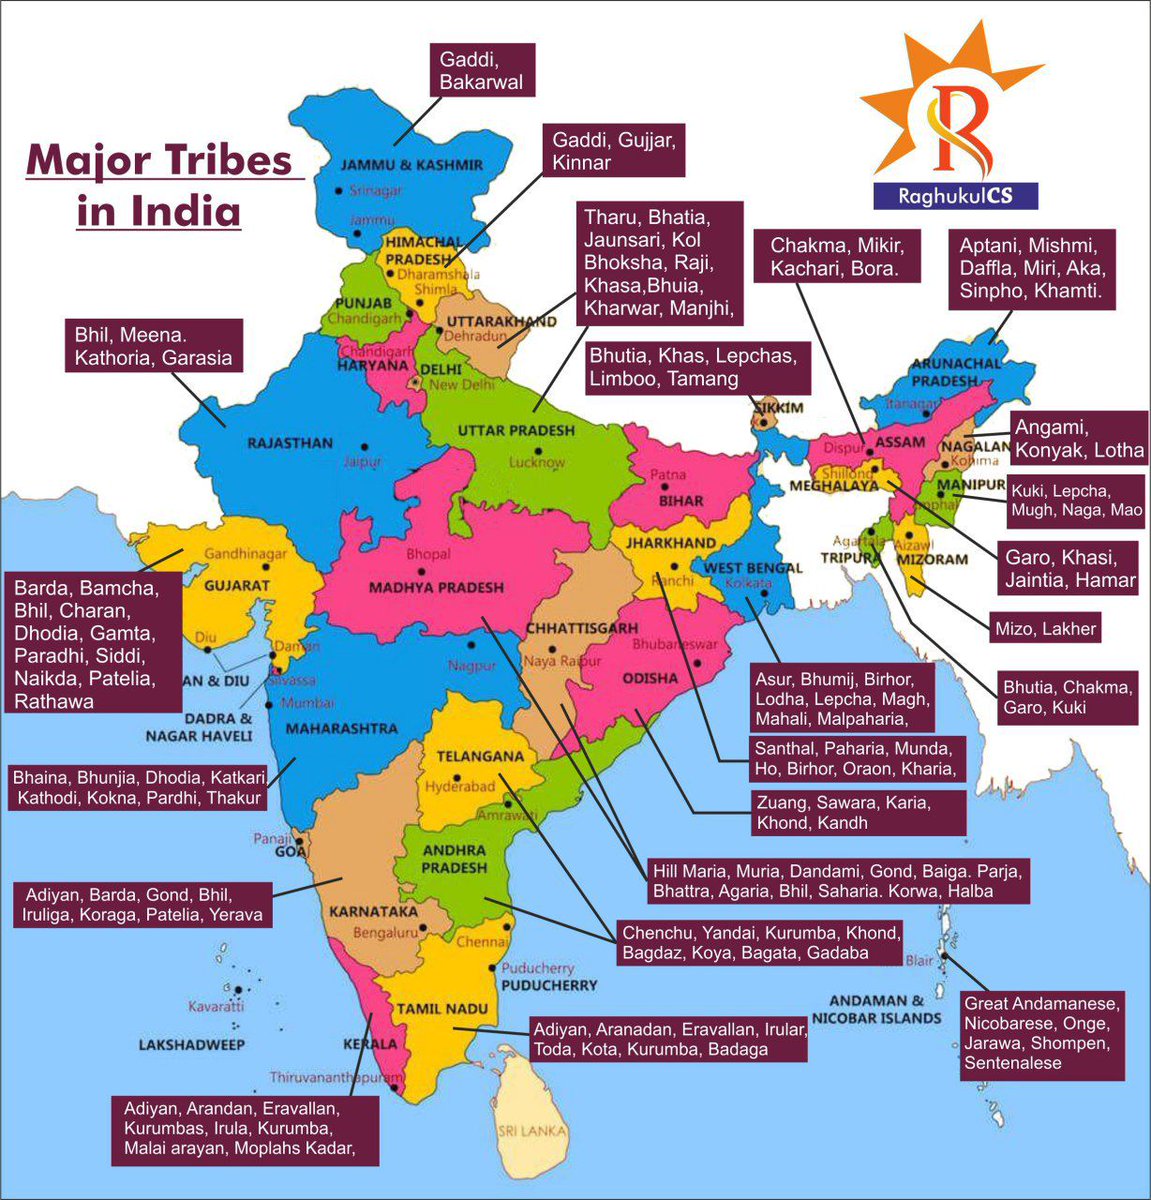 Important Tribes Of India || In News: 1) Bonda - Orissa. 2) Katkari - Maharashtra & Gujarat. 3) Sahariya - M.P & Rajasthan. 4) Baiga tribe - M.P. 5) Asur & Paharia - Jharkhand. 6) Reang/Bru - Tripura & Mizoram. 7) Chenchu tribe - Andhra Pradesh. 8) Konda reddy - Andhra Pradesh.